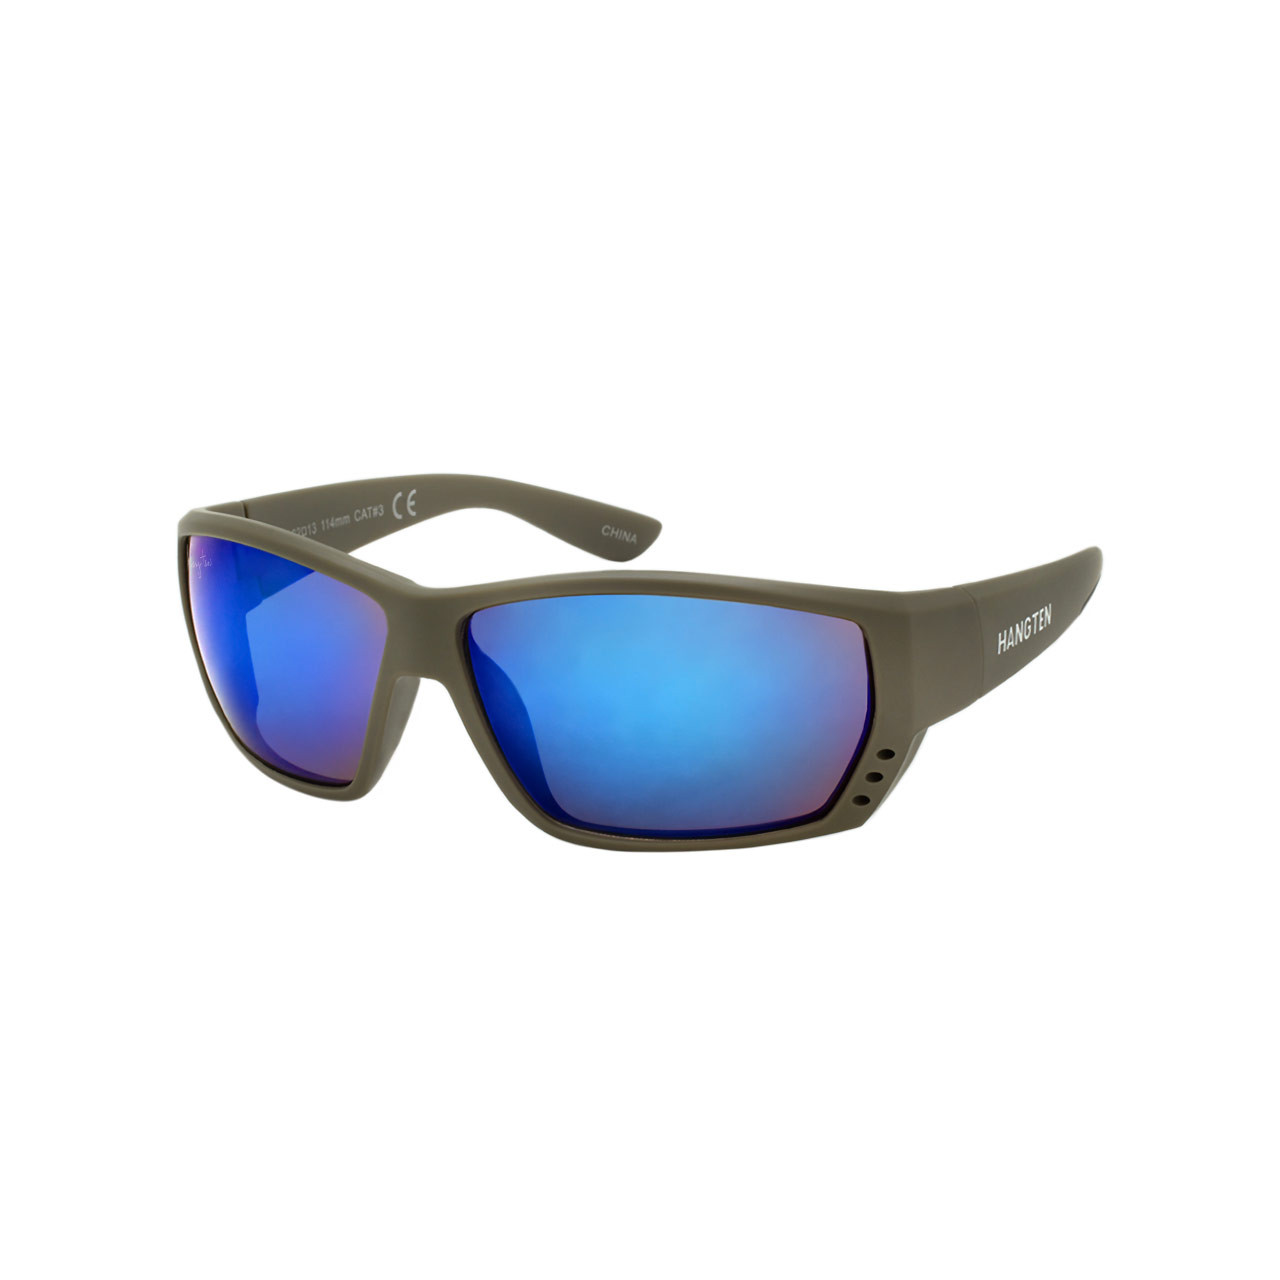 Wholesale Hang Ten Color Polycarbonate UV400 Sport Sunglasses Men | 1 Inner with Tags | HT36B-DZ